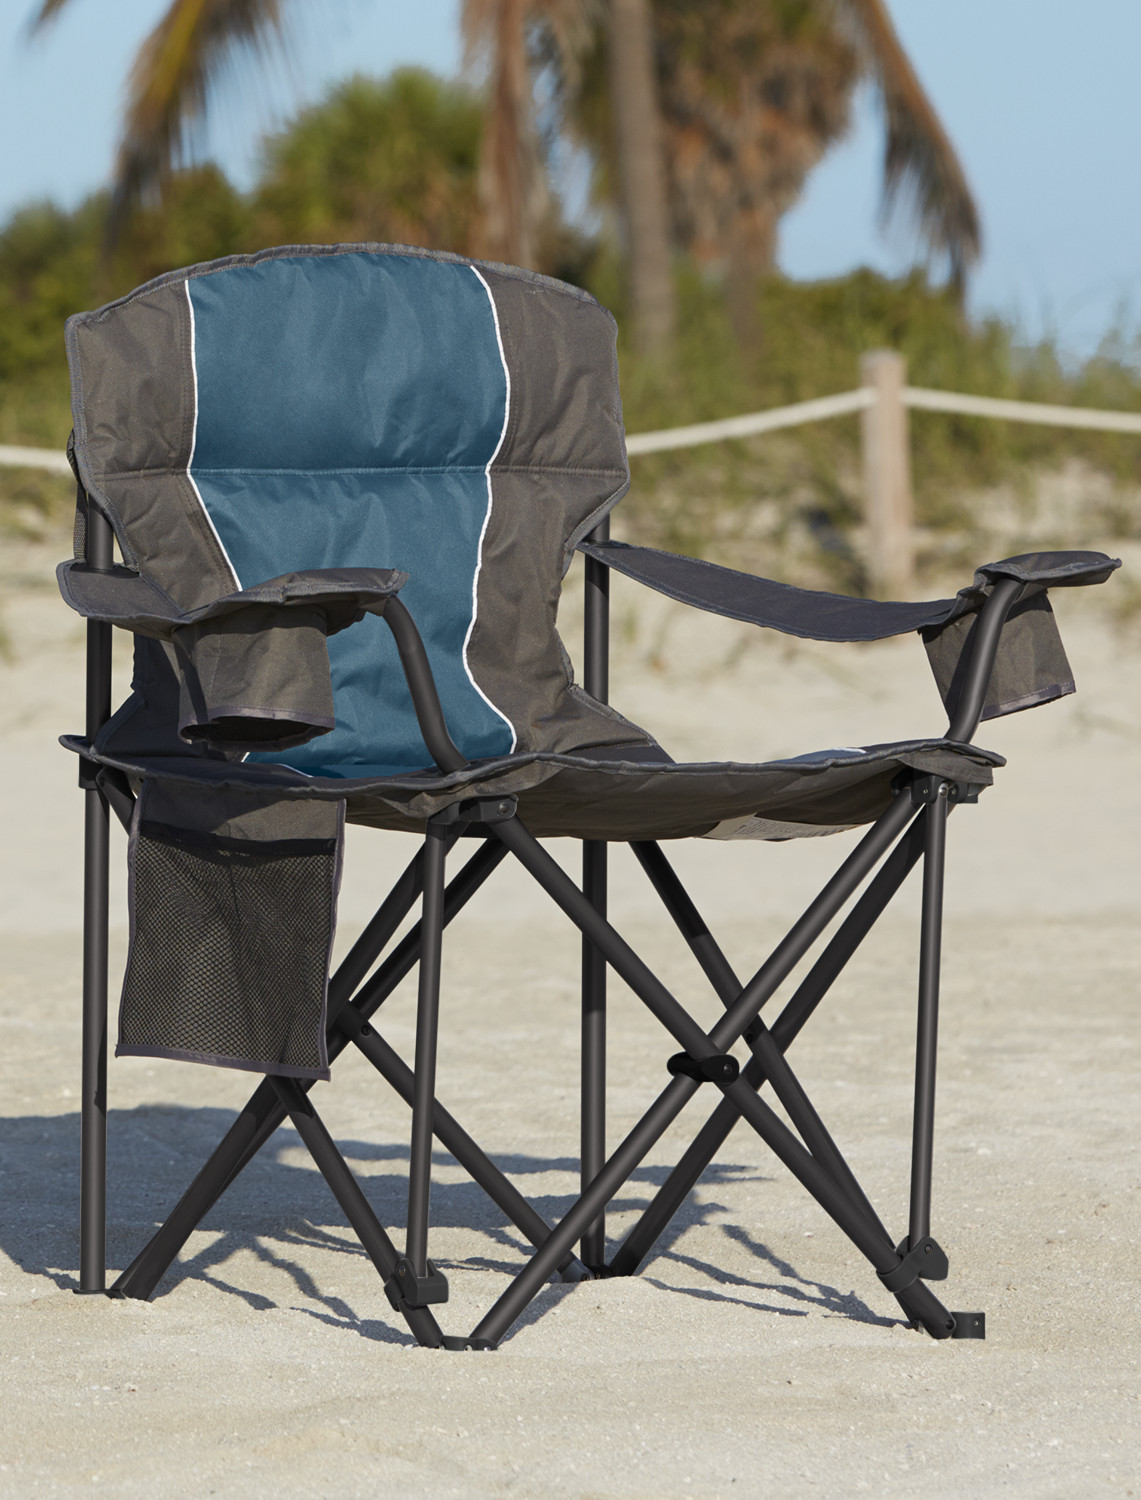 LivingXL 500-Lb. Capacity Heavy-Duty Portable Chair Blue 500 lb